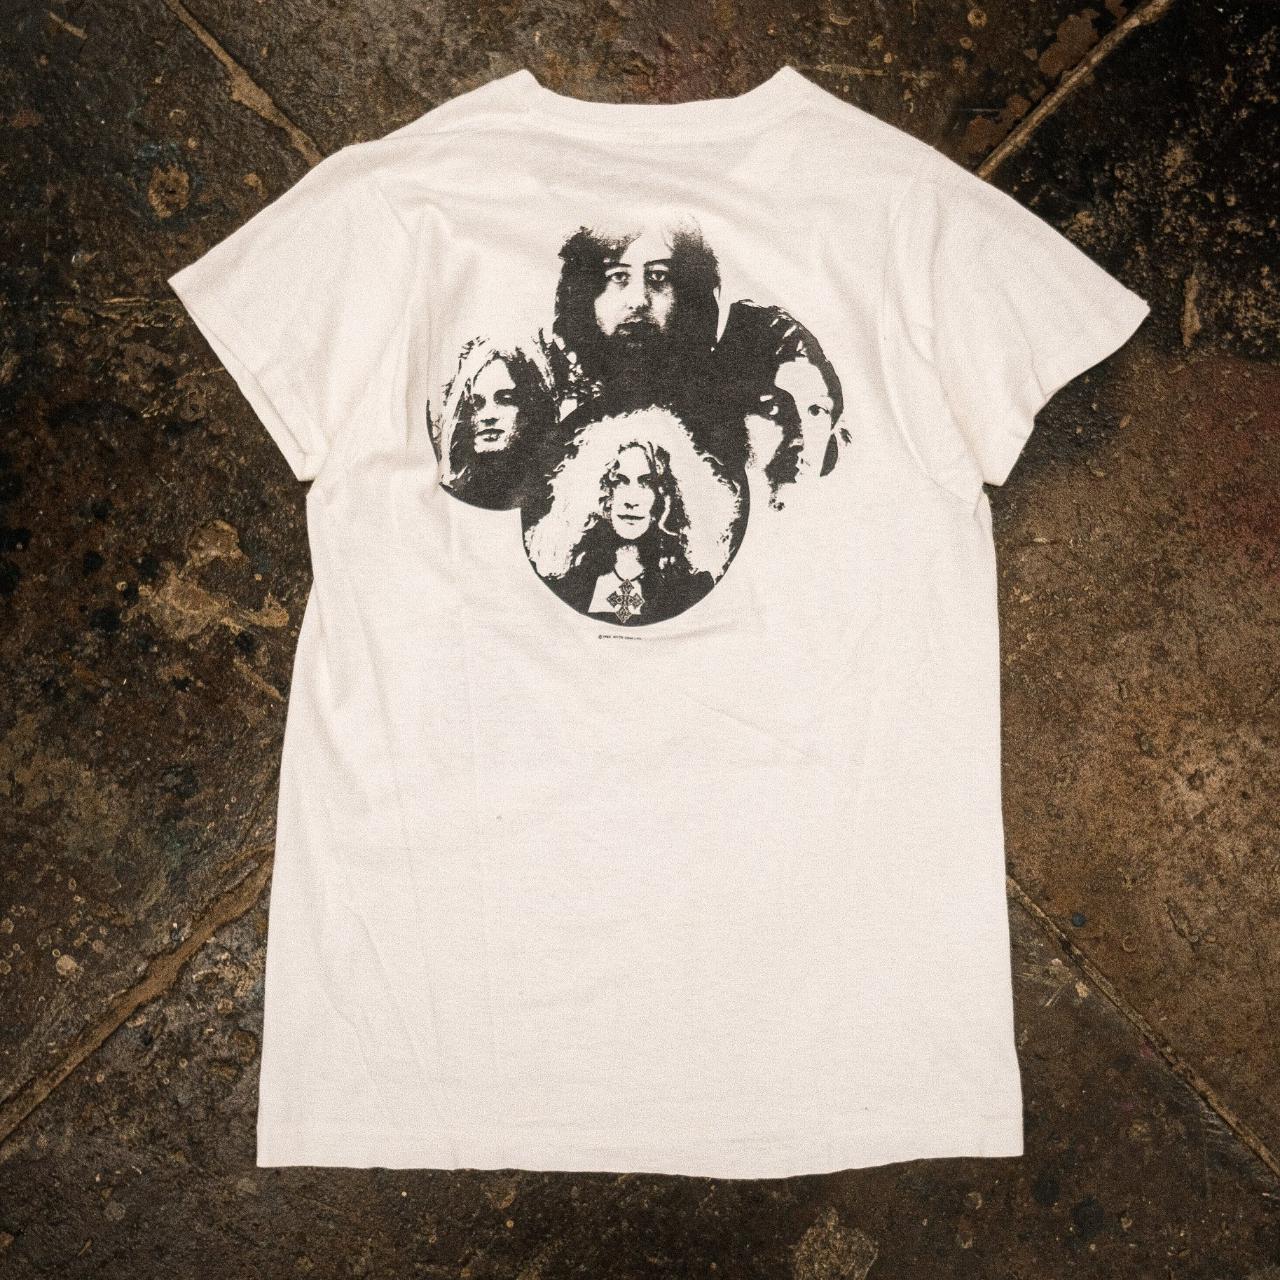 Product Image 2 - 1984 Led Zeppelin double sided